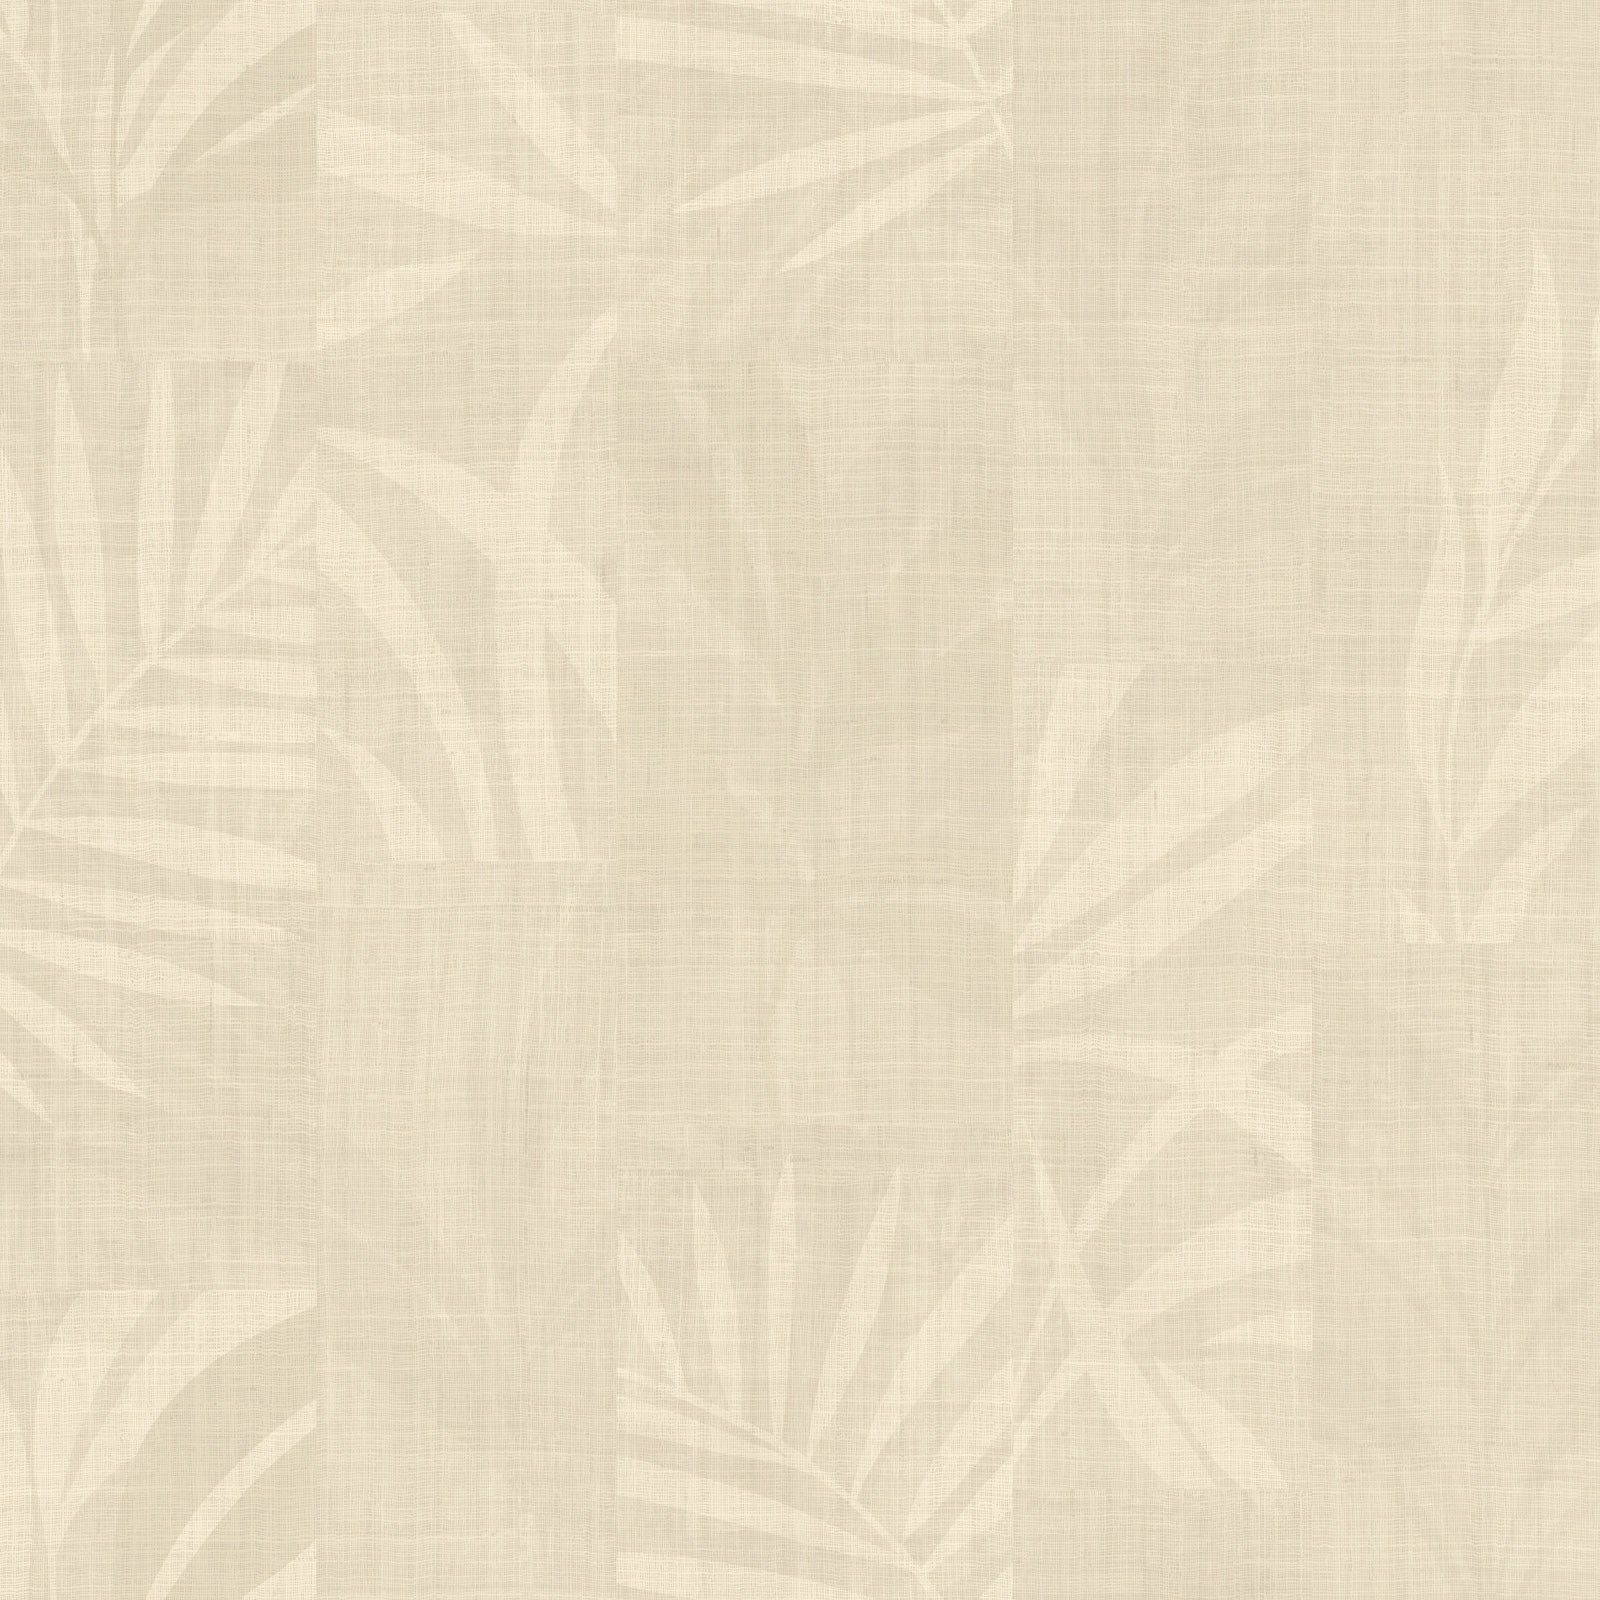 Z18915 Trussardi textured Tropical leaves wallpaper 